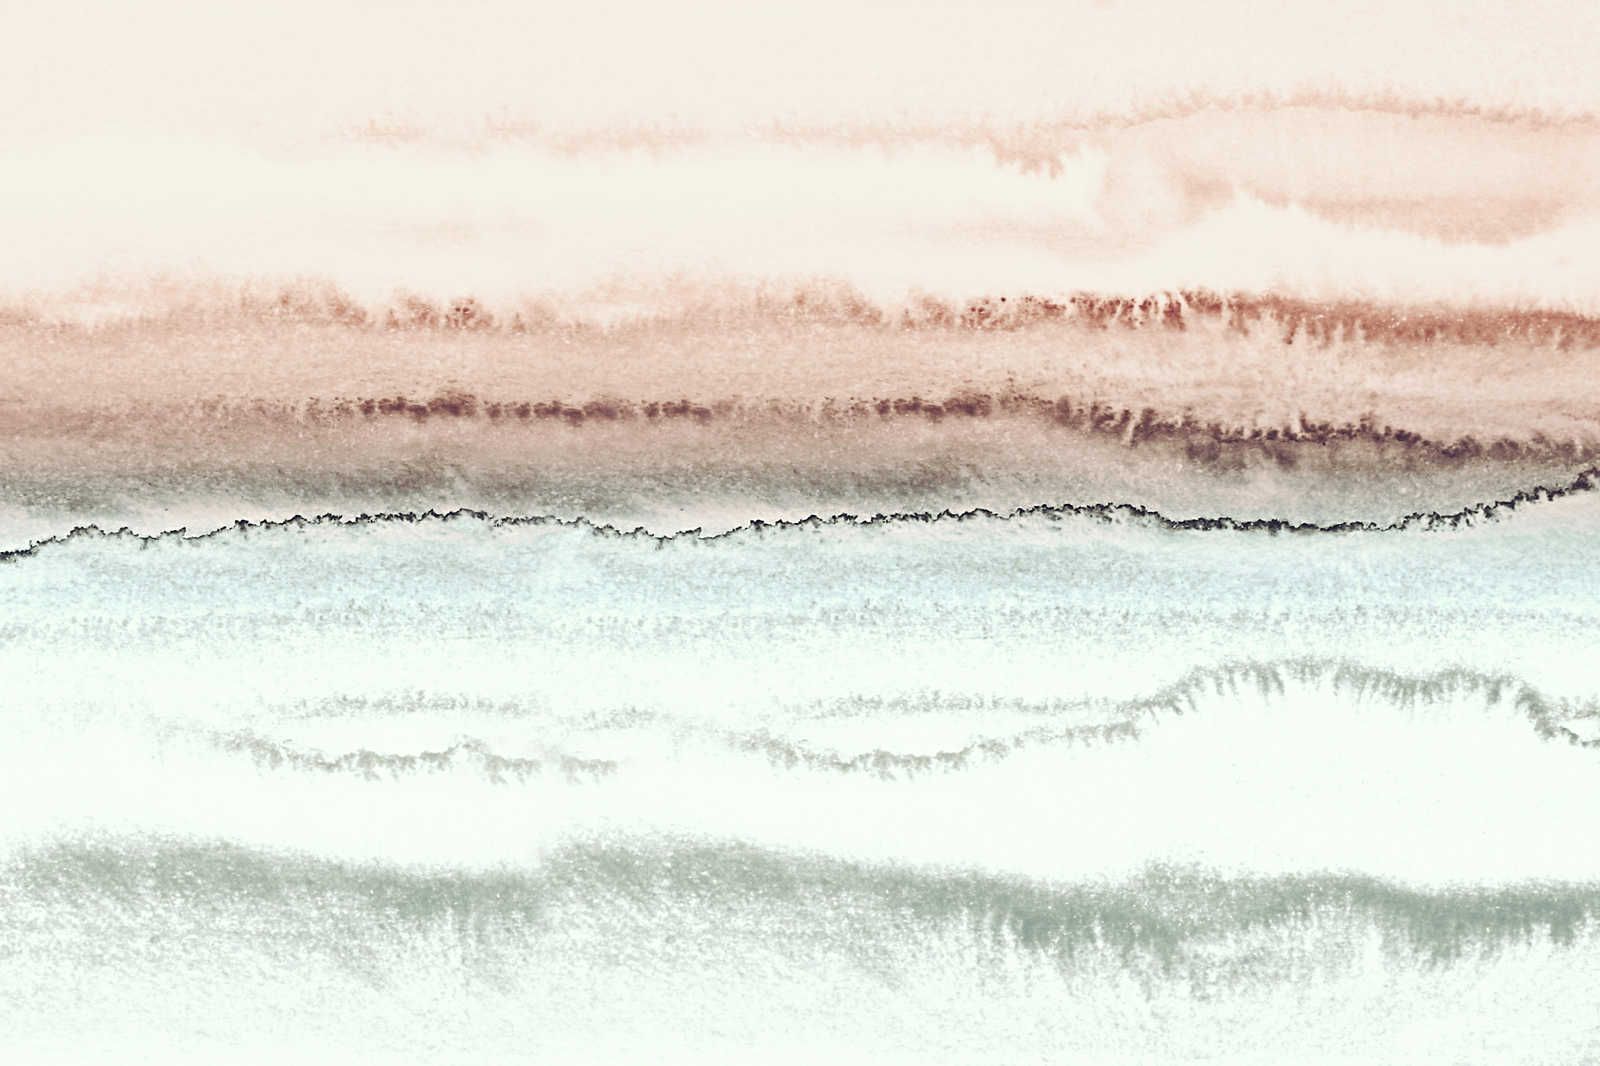             Aquarell Leinwandbild mit abstrakter Landschaft & Farbverlauf – 1,20 m x 0,80 m
        